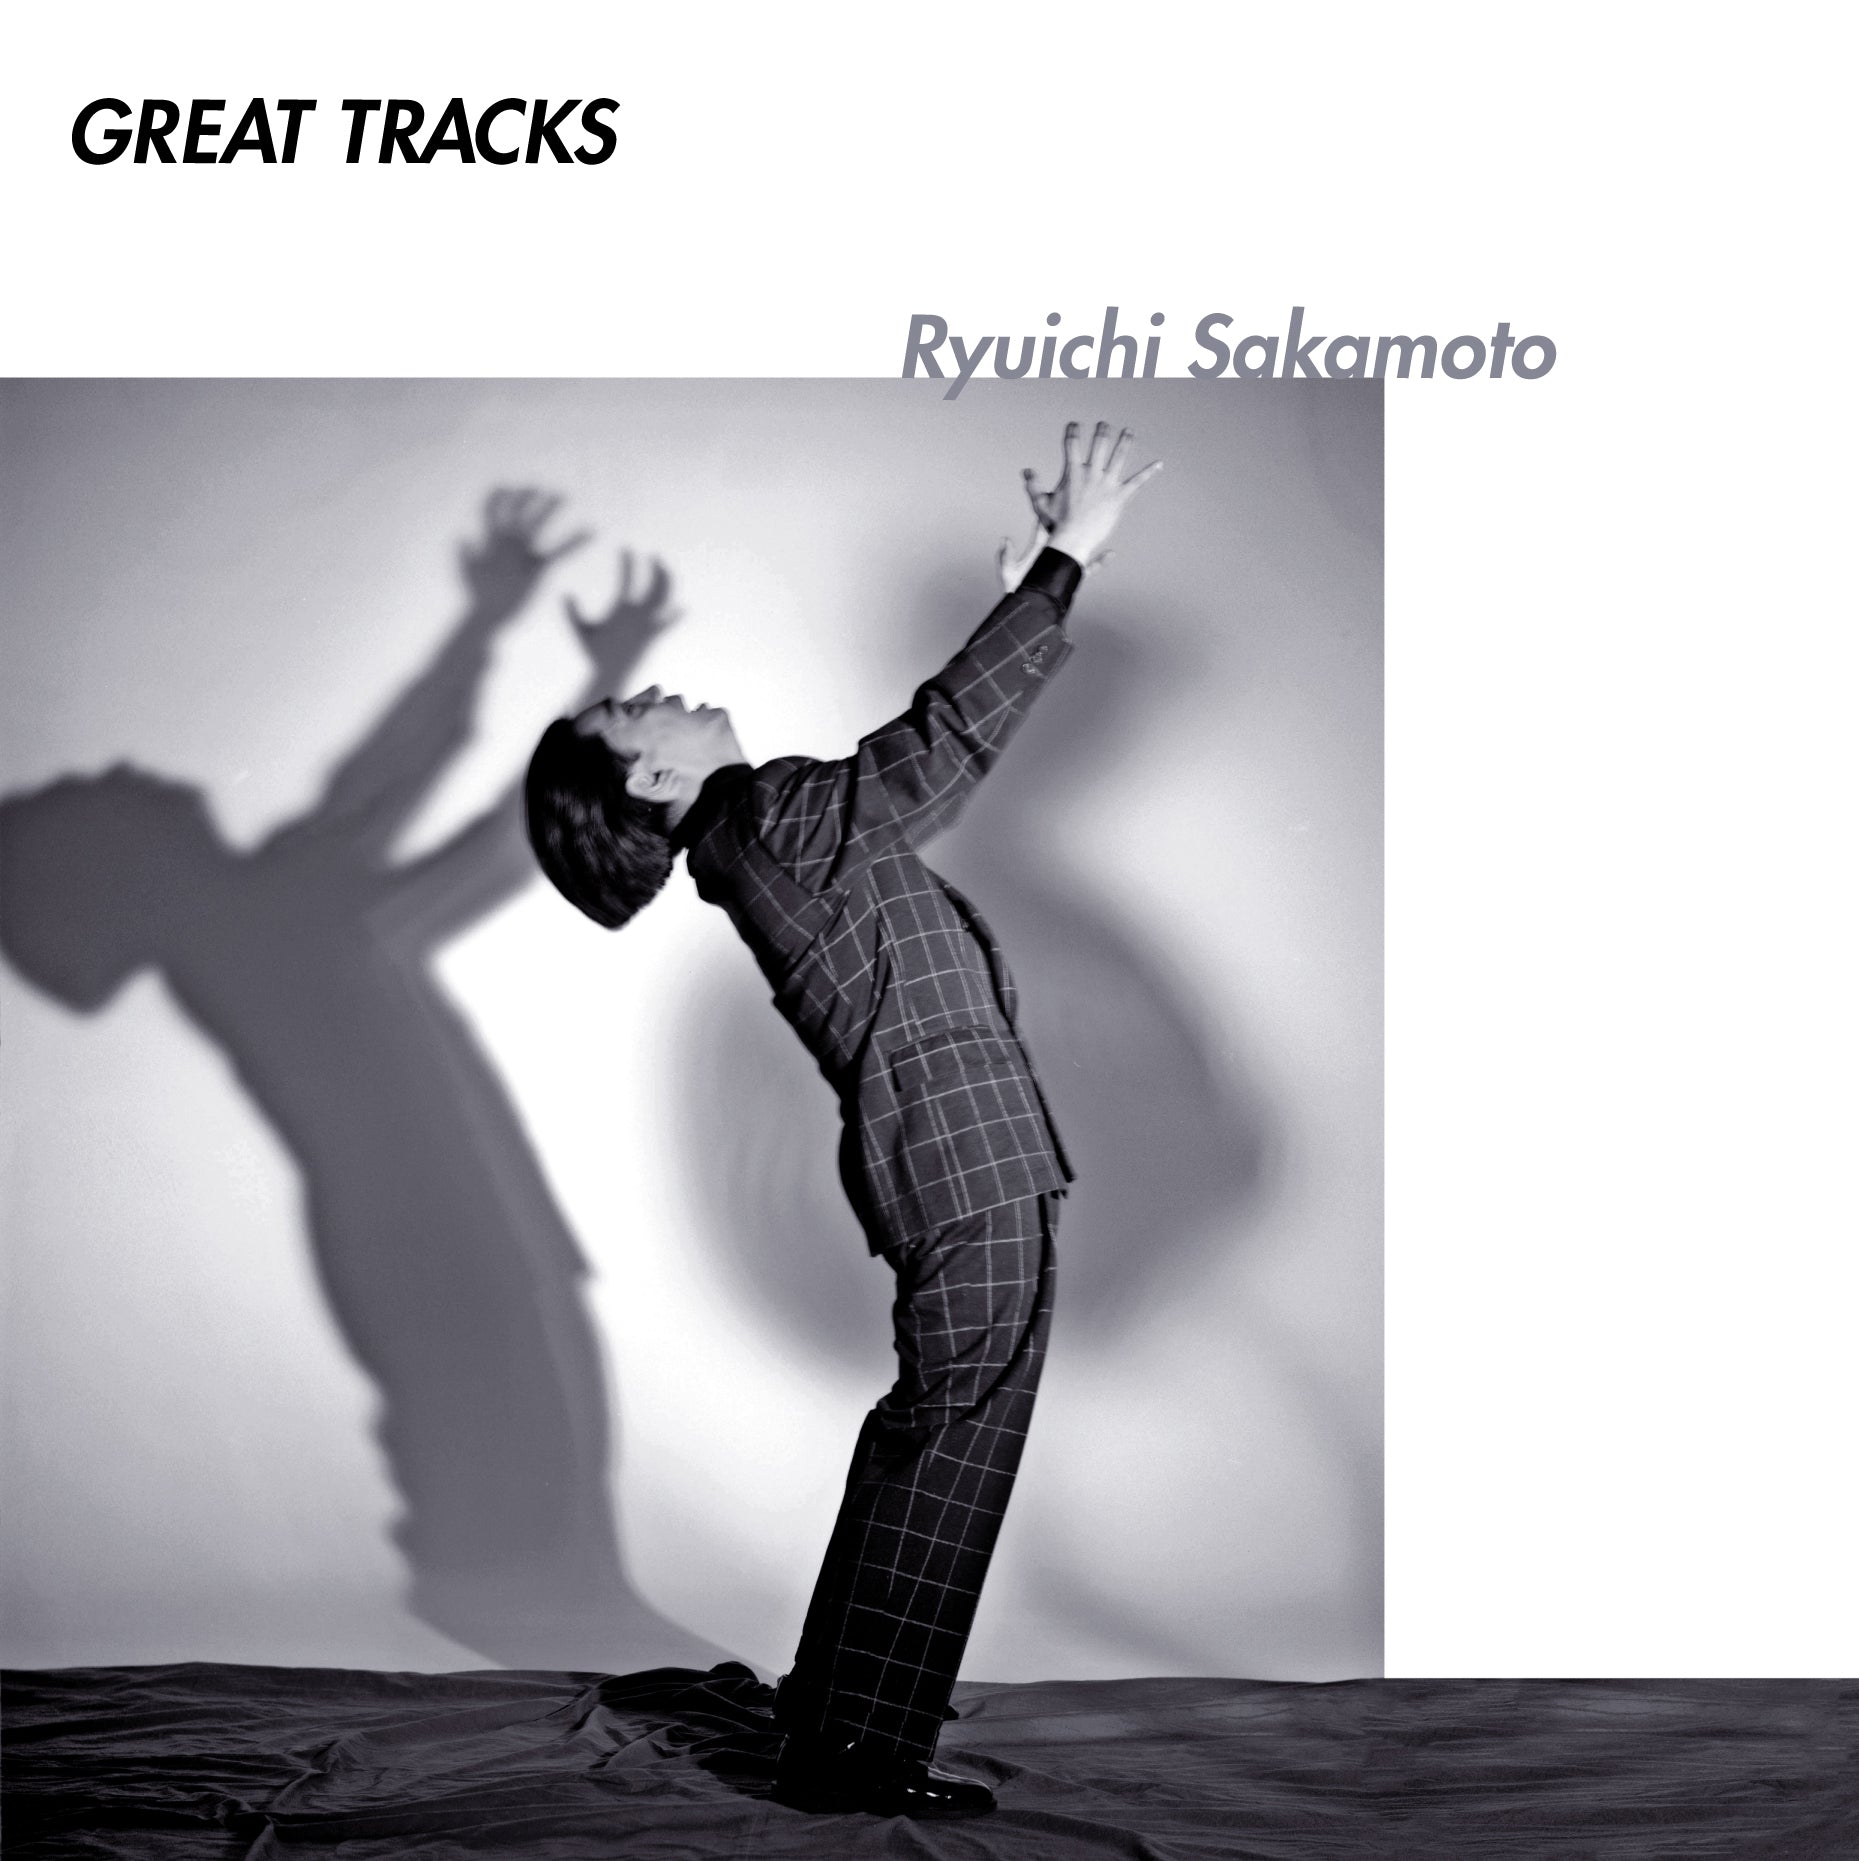 Great Tracks – Light in the Attic